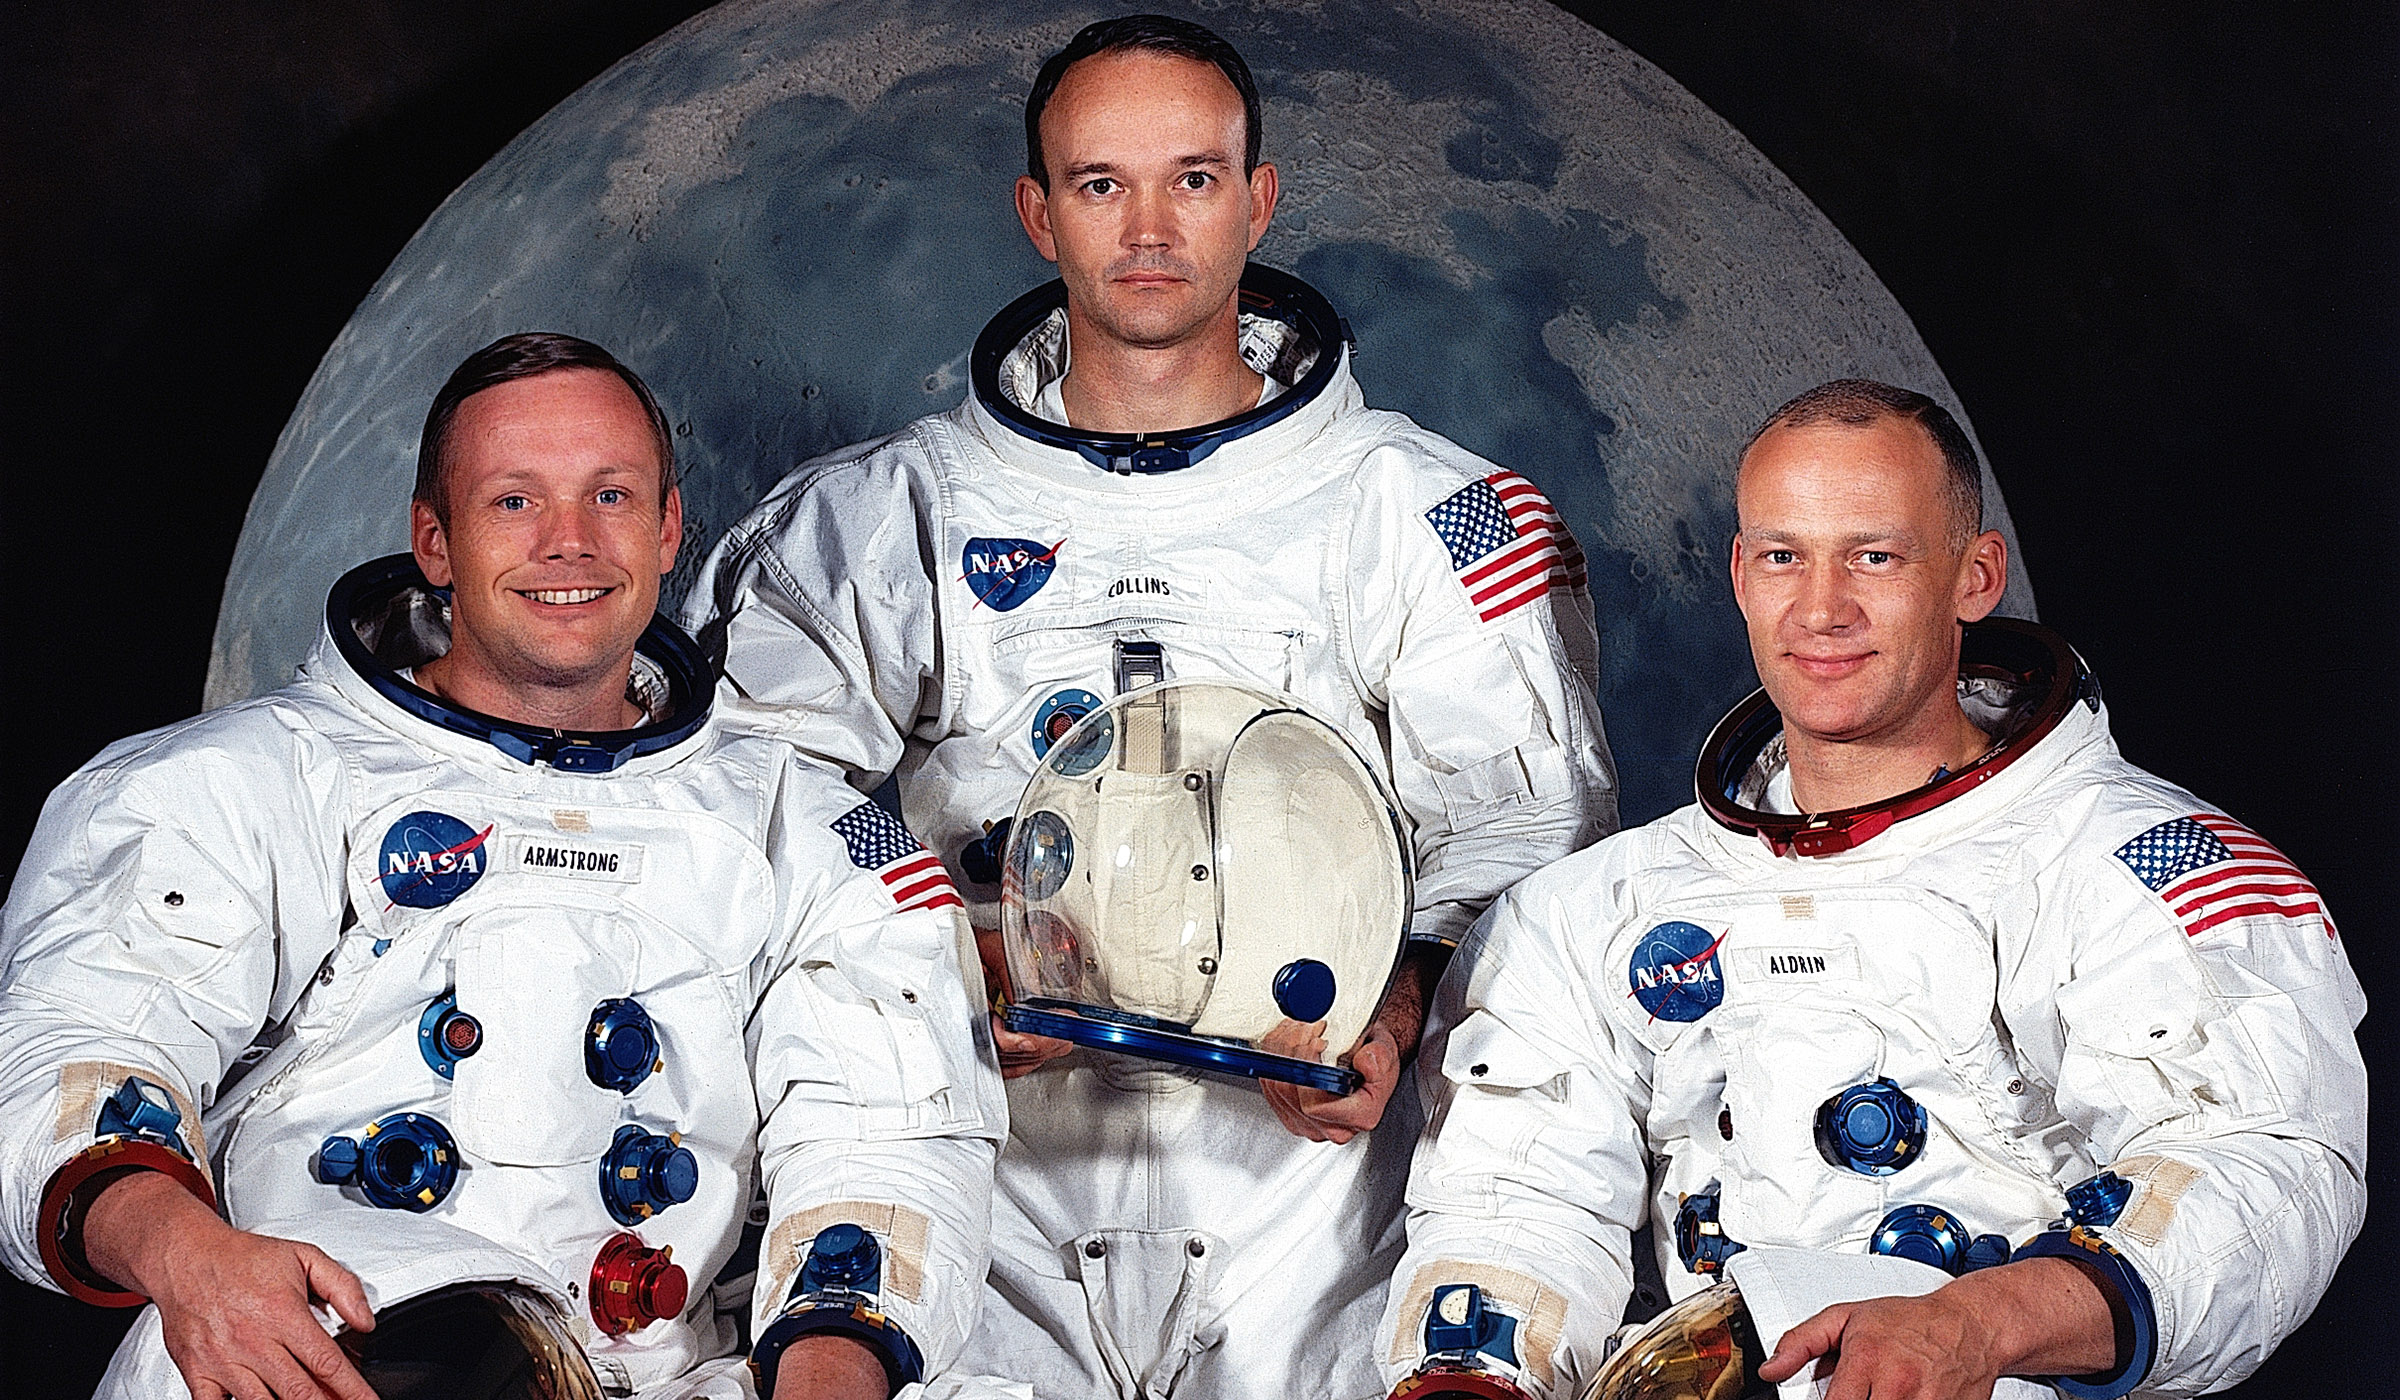 Part Nine: Apollo 11 Mission